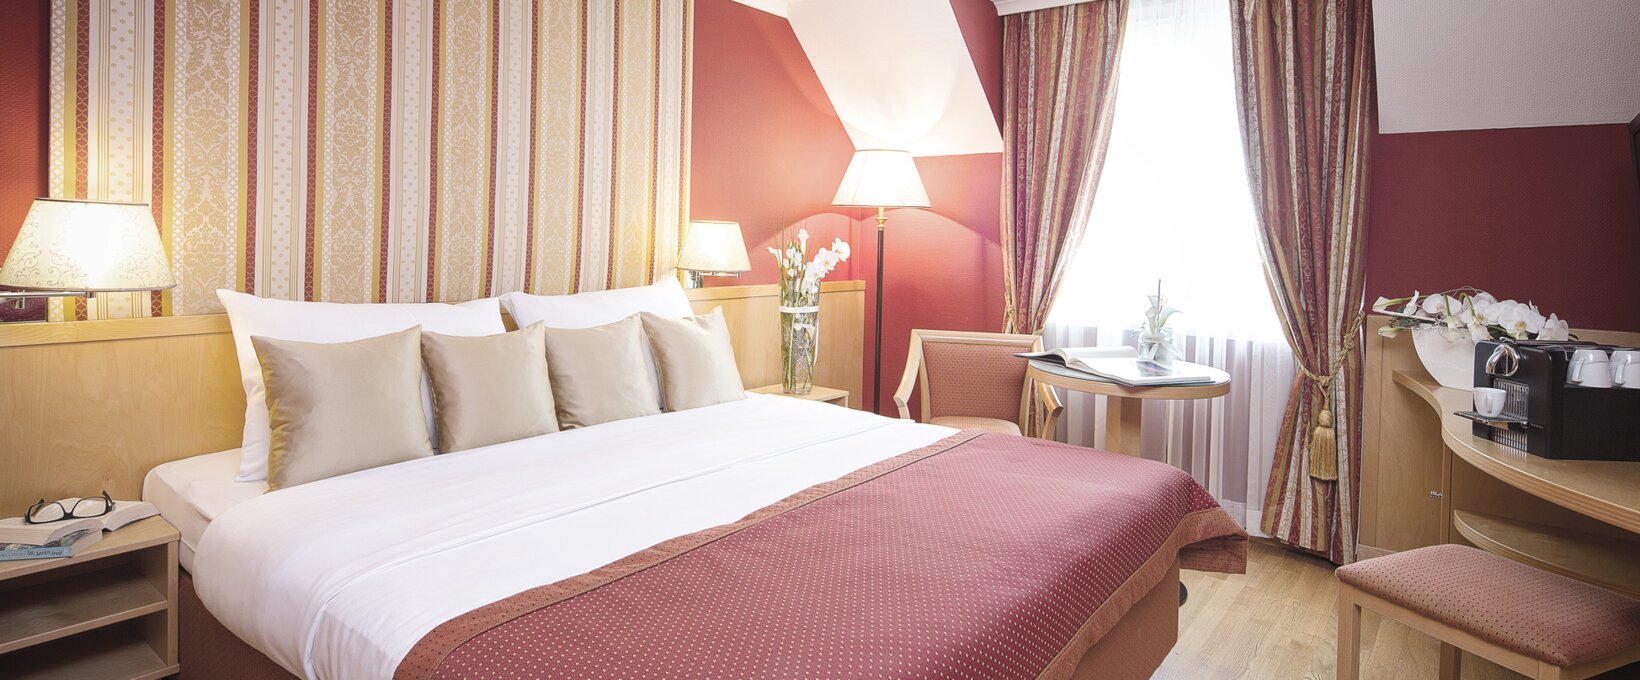 Executive Zimmer mit Kingsize Bett | Hotel Ananas in Wien